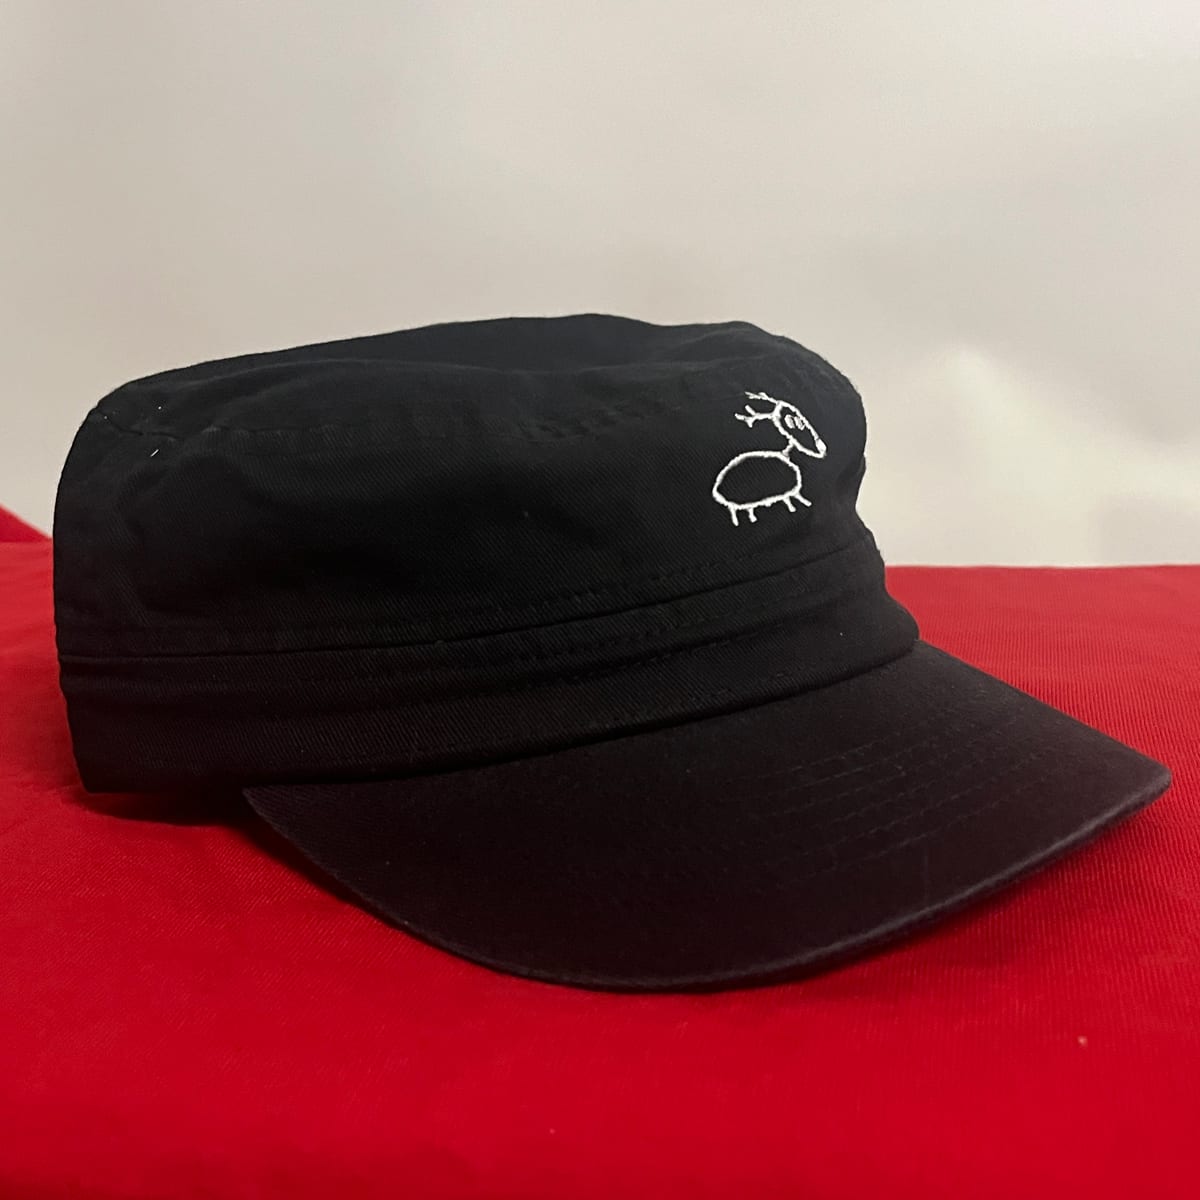 Black thin army cap